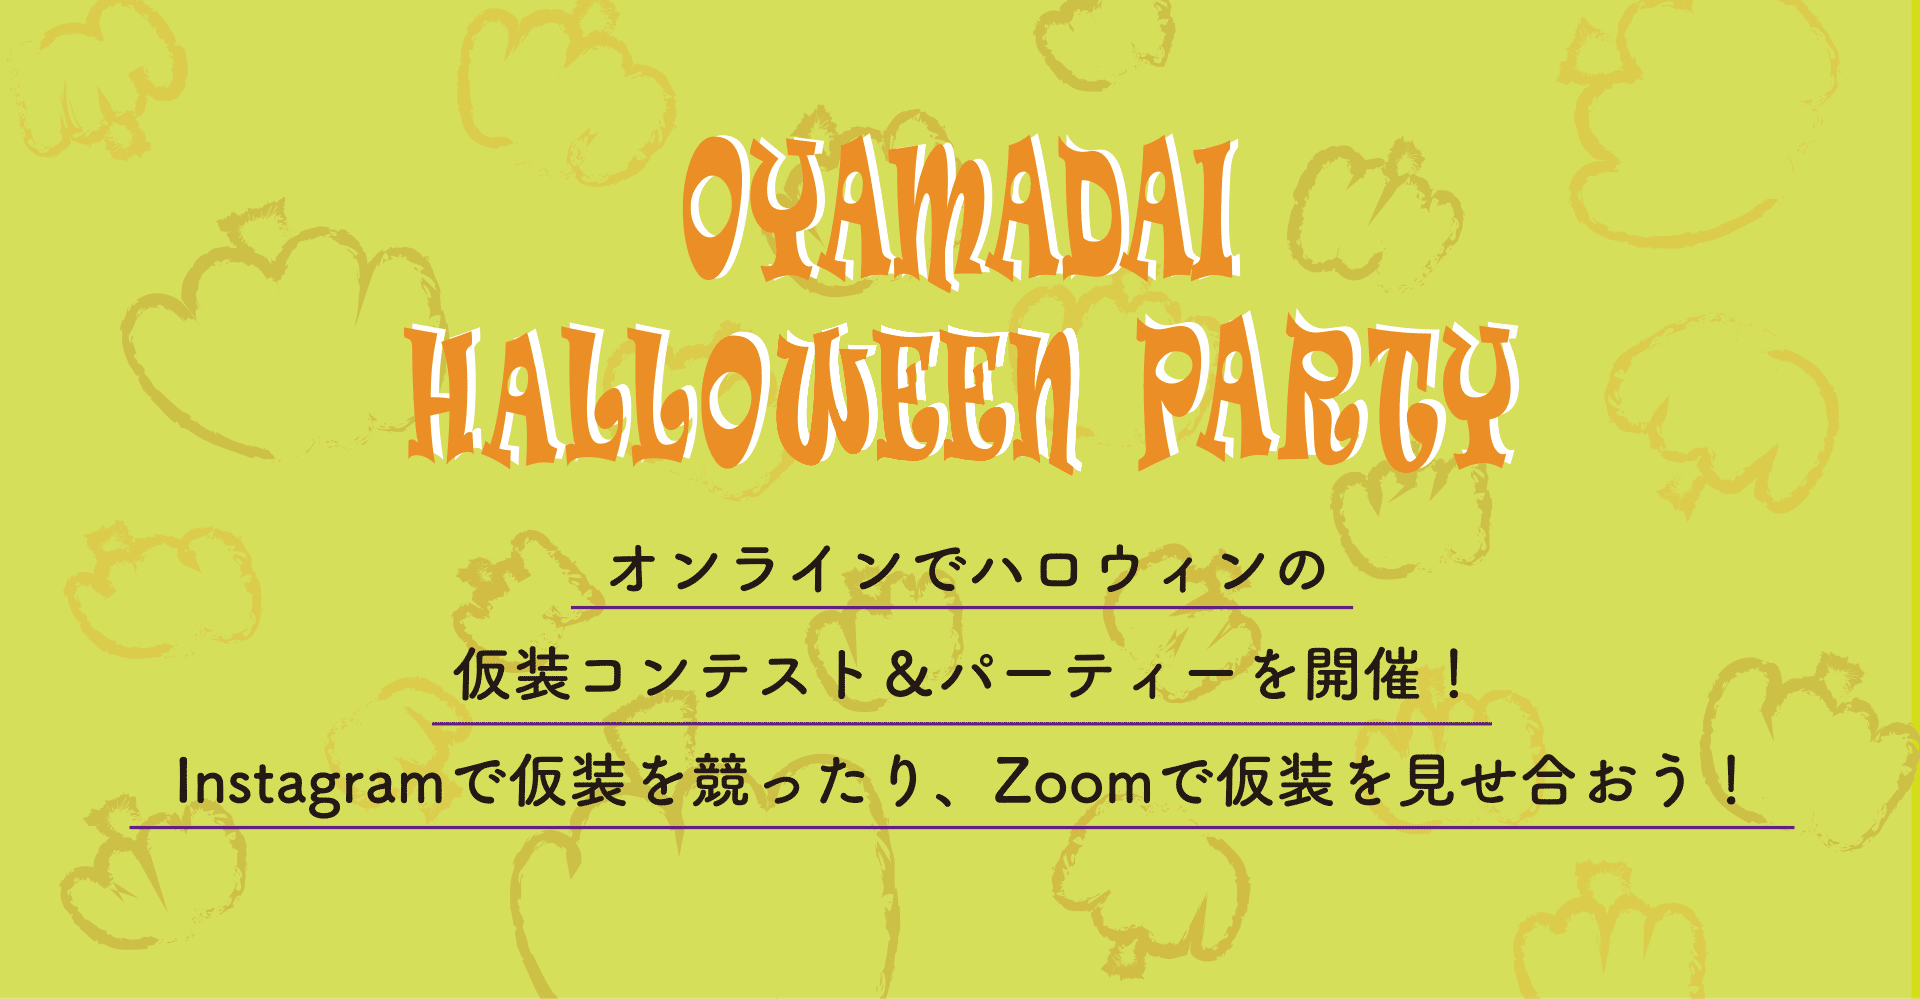 OYAMADAI HALLOWEEN PARTY